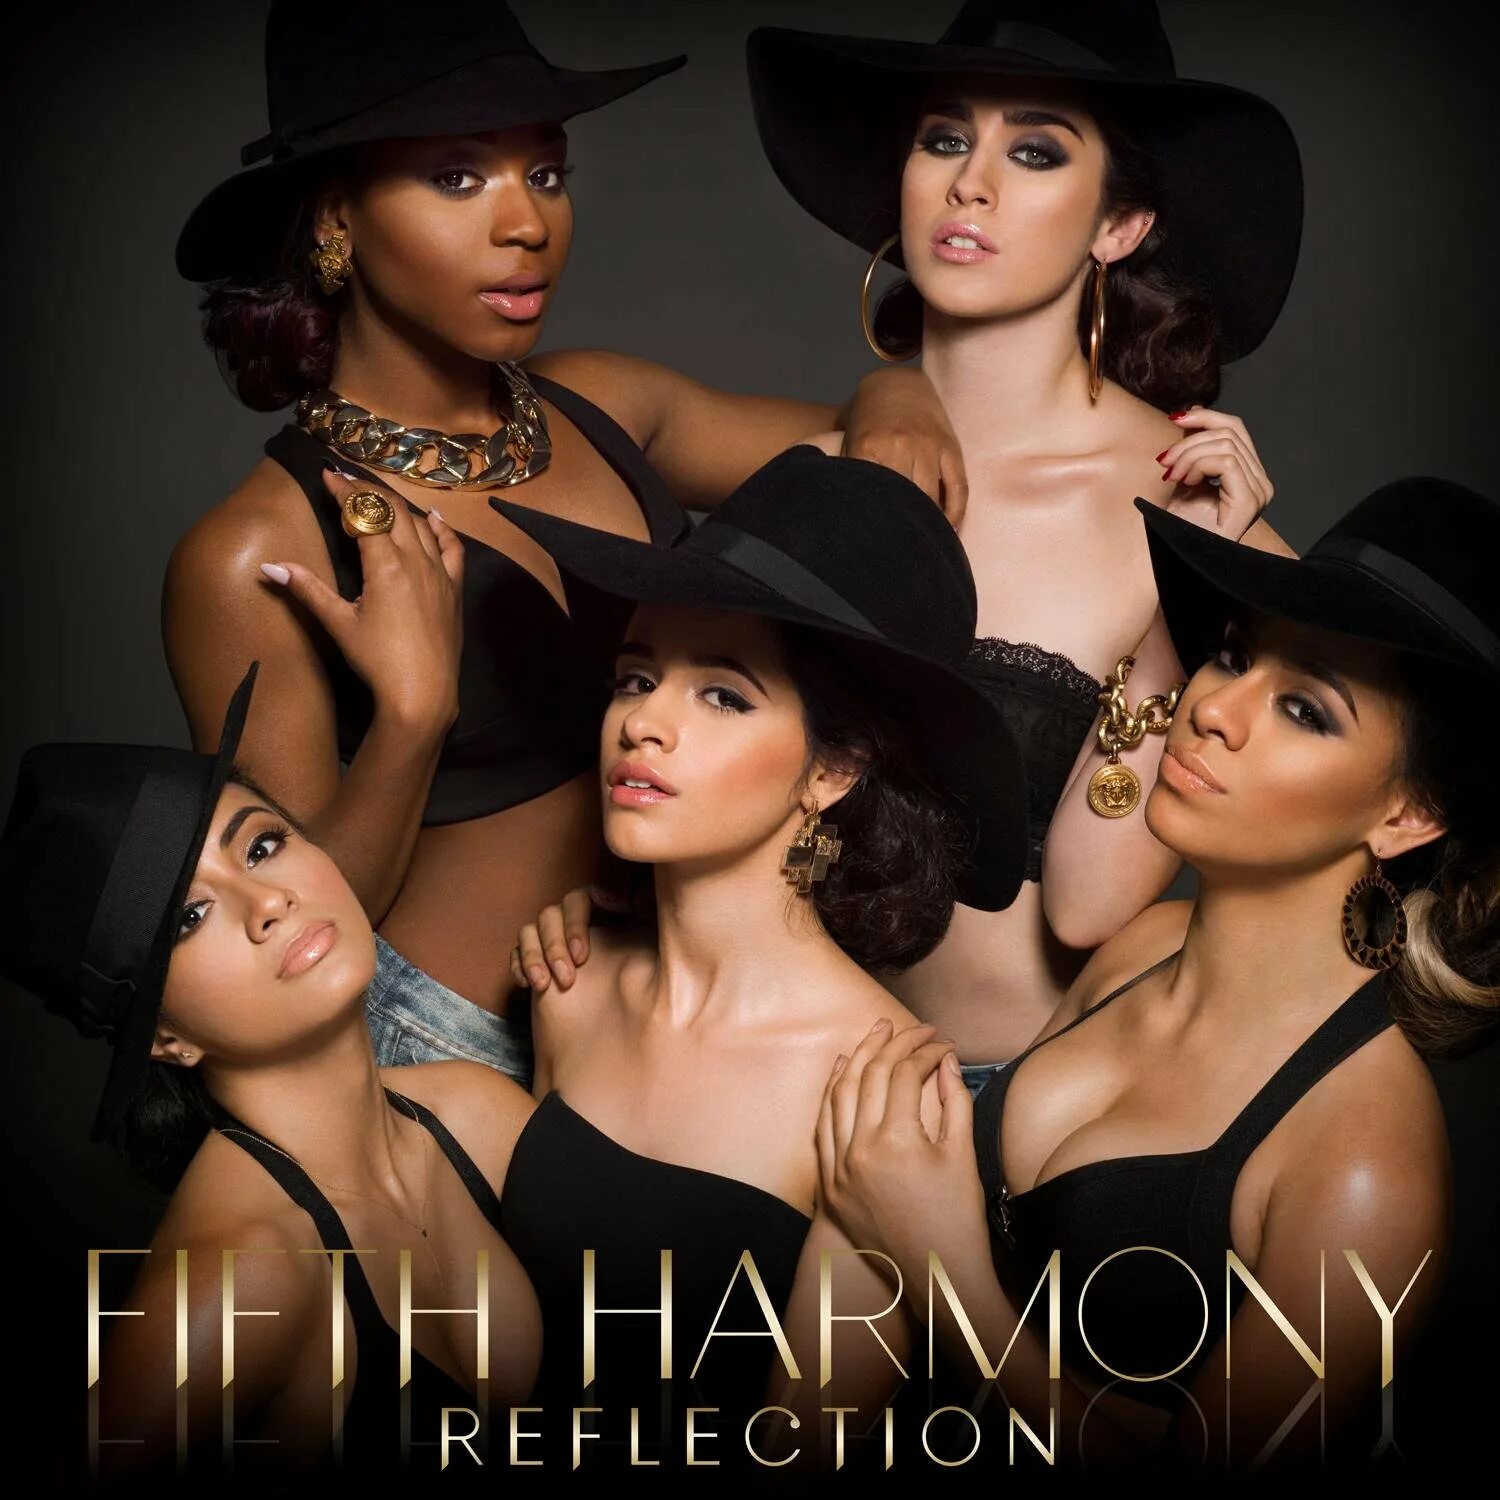 Fifth harmony kid ink worth it. Fifth Harmony. Fifth Harmony reflection. Worth it исполнитель Fifth Harmony. Fifth Harmony Worth it обложка.